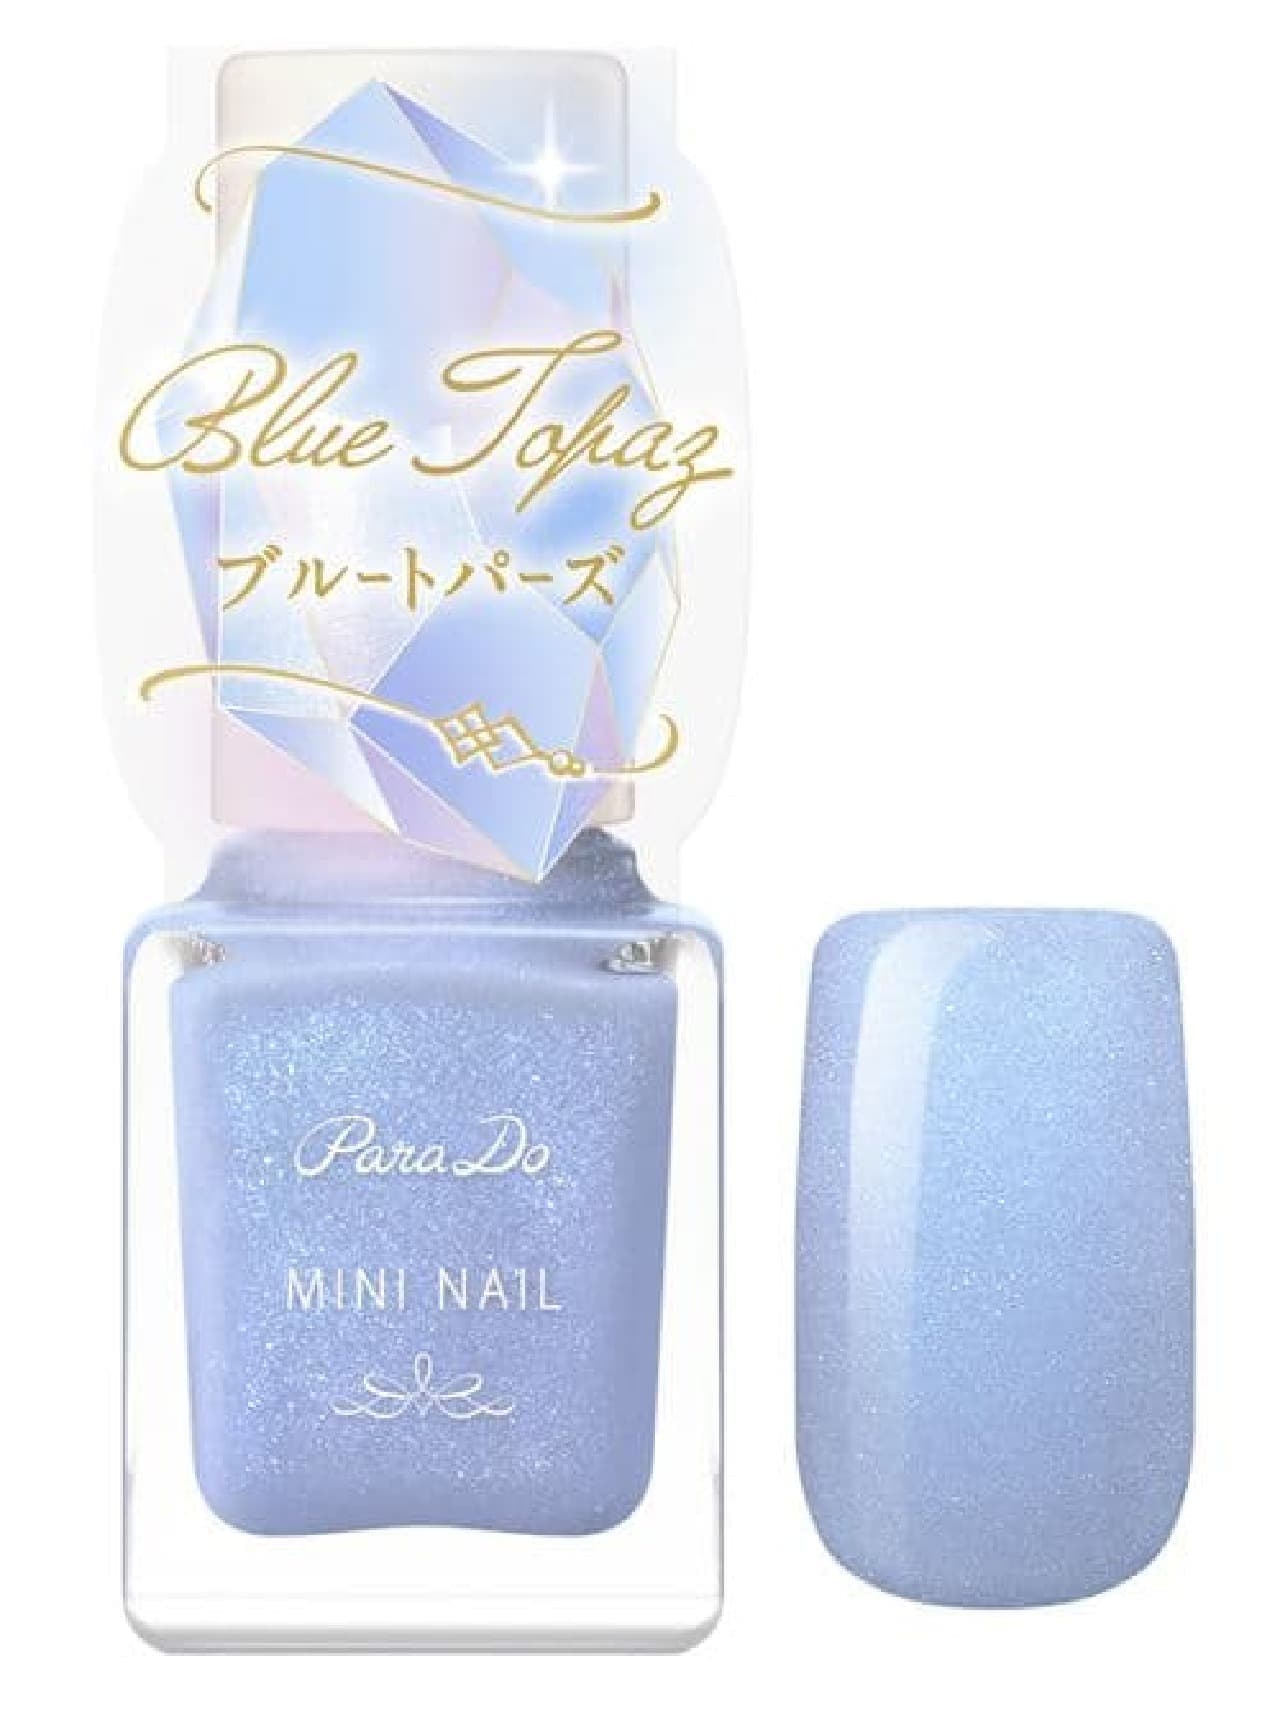 Paradoo Mini Nail Polish "BL12 Blue Topaz